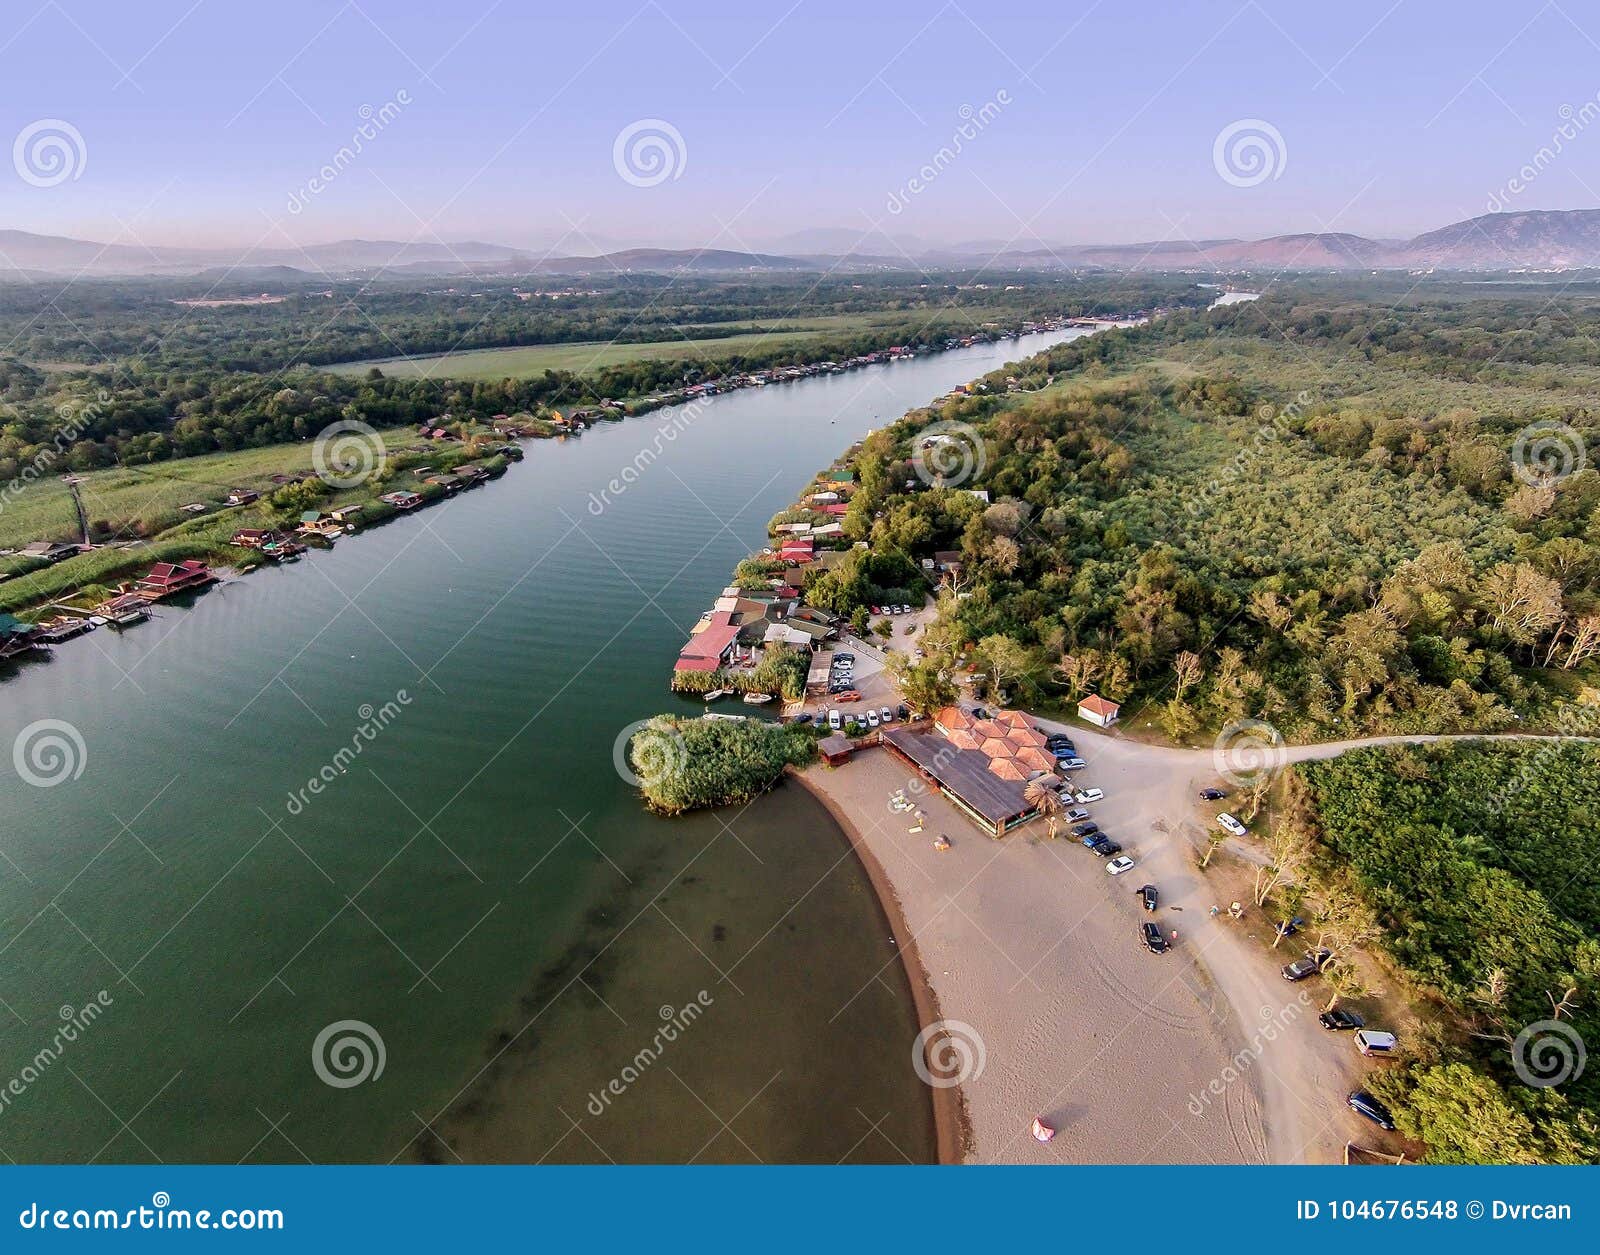 aerial view of the river bojana and the ada bojana island, monte